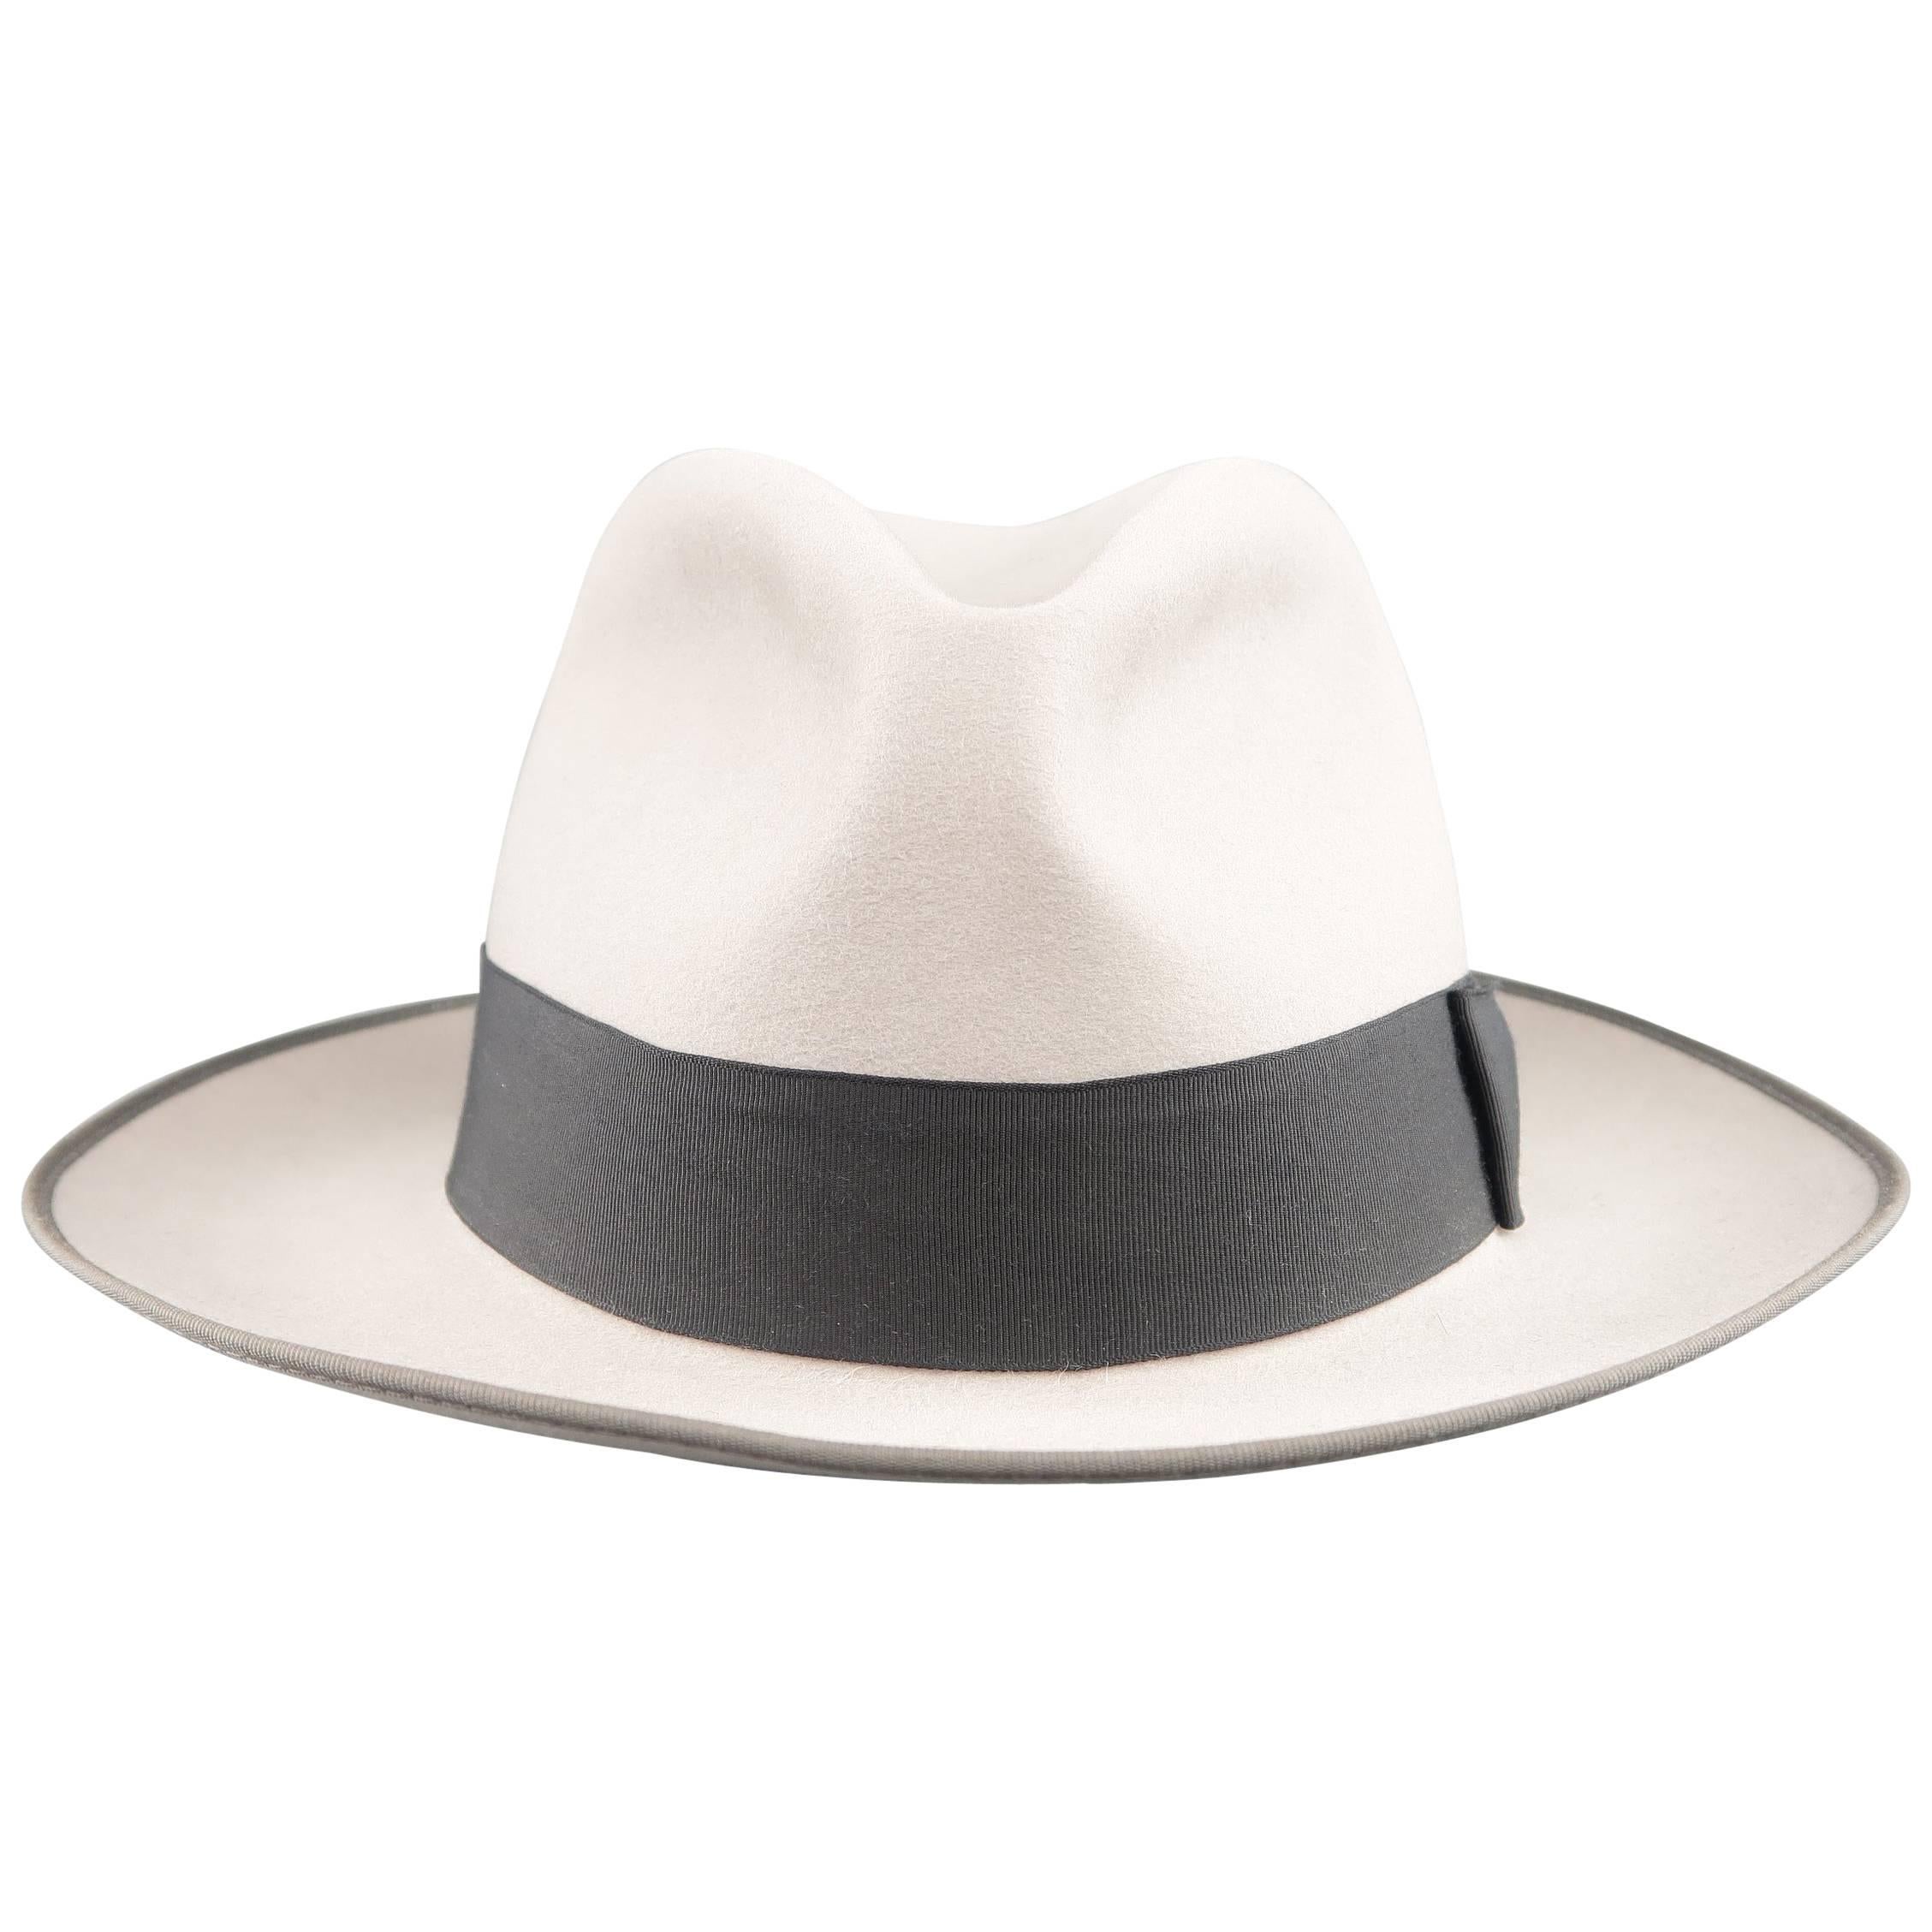 OPTIMO for WILKES BASHFORD Size 7 3/8 Light Gray Felt Fedora Hat With Box